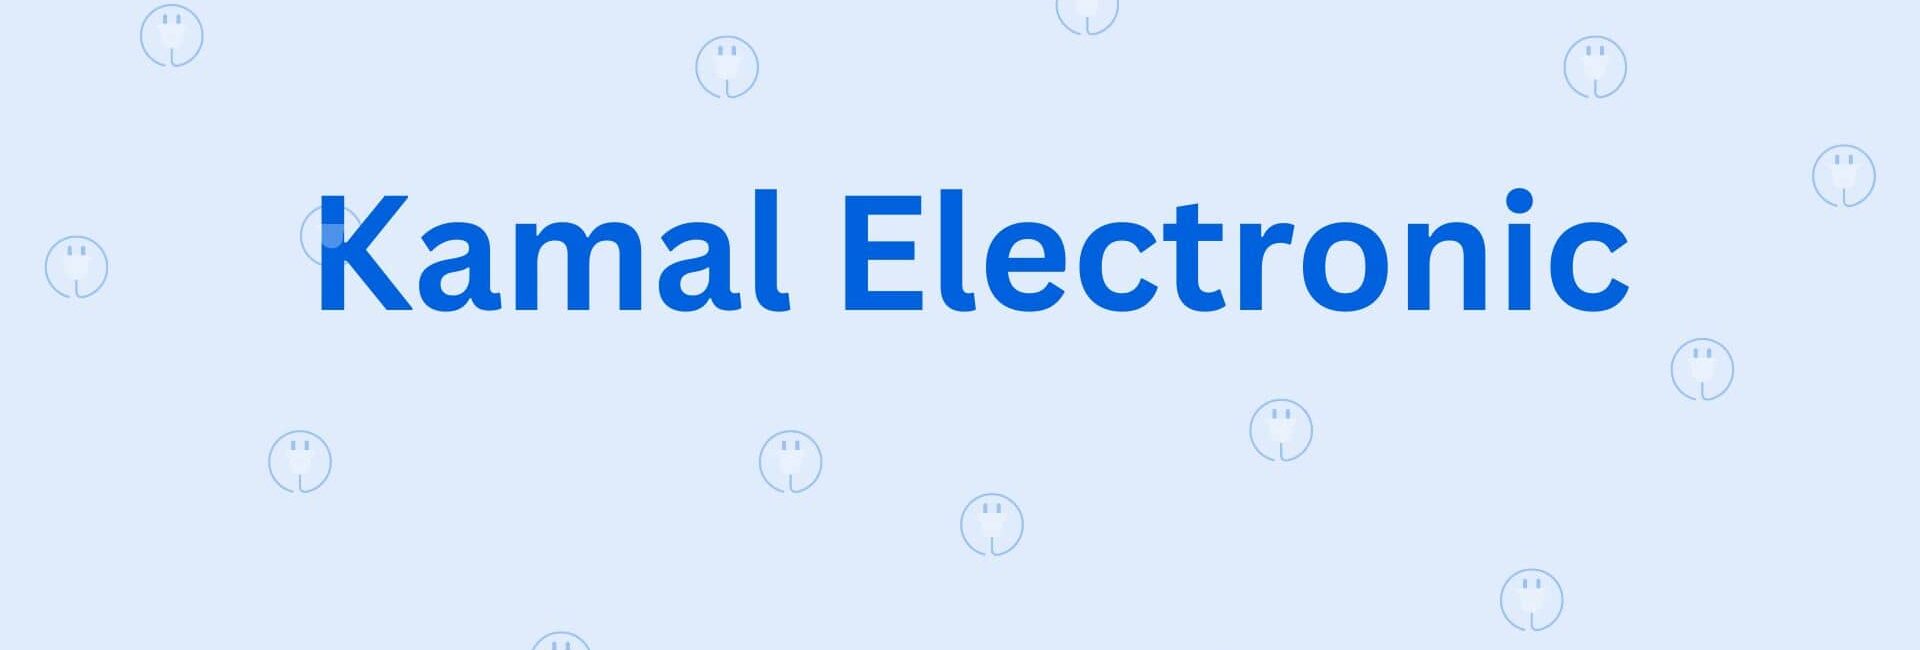 Kamal Electronic - Electronic Goods Dealer in Hisar